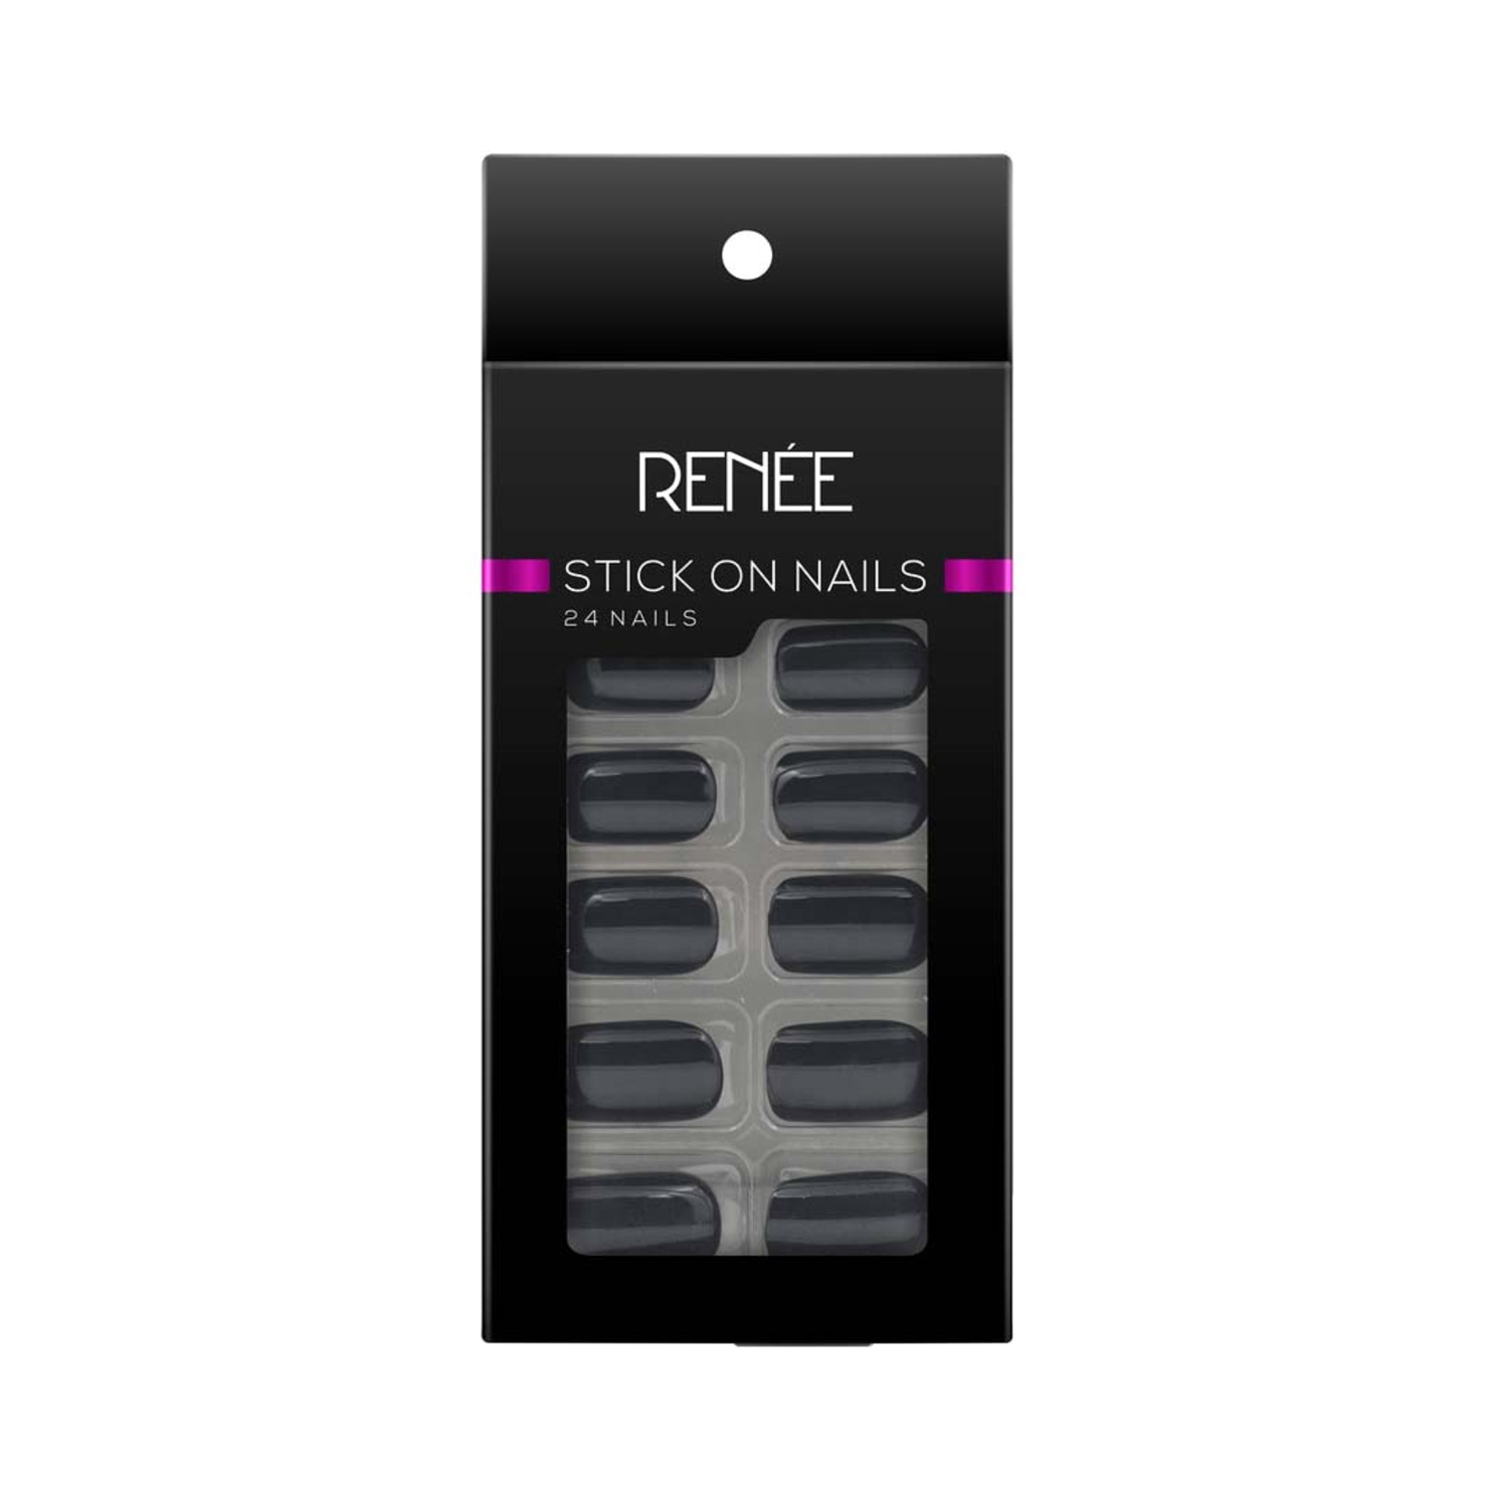 RENEE Stick On Nail Art Kits - BN01 (24 Pcs)